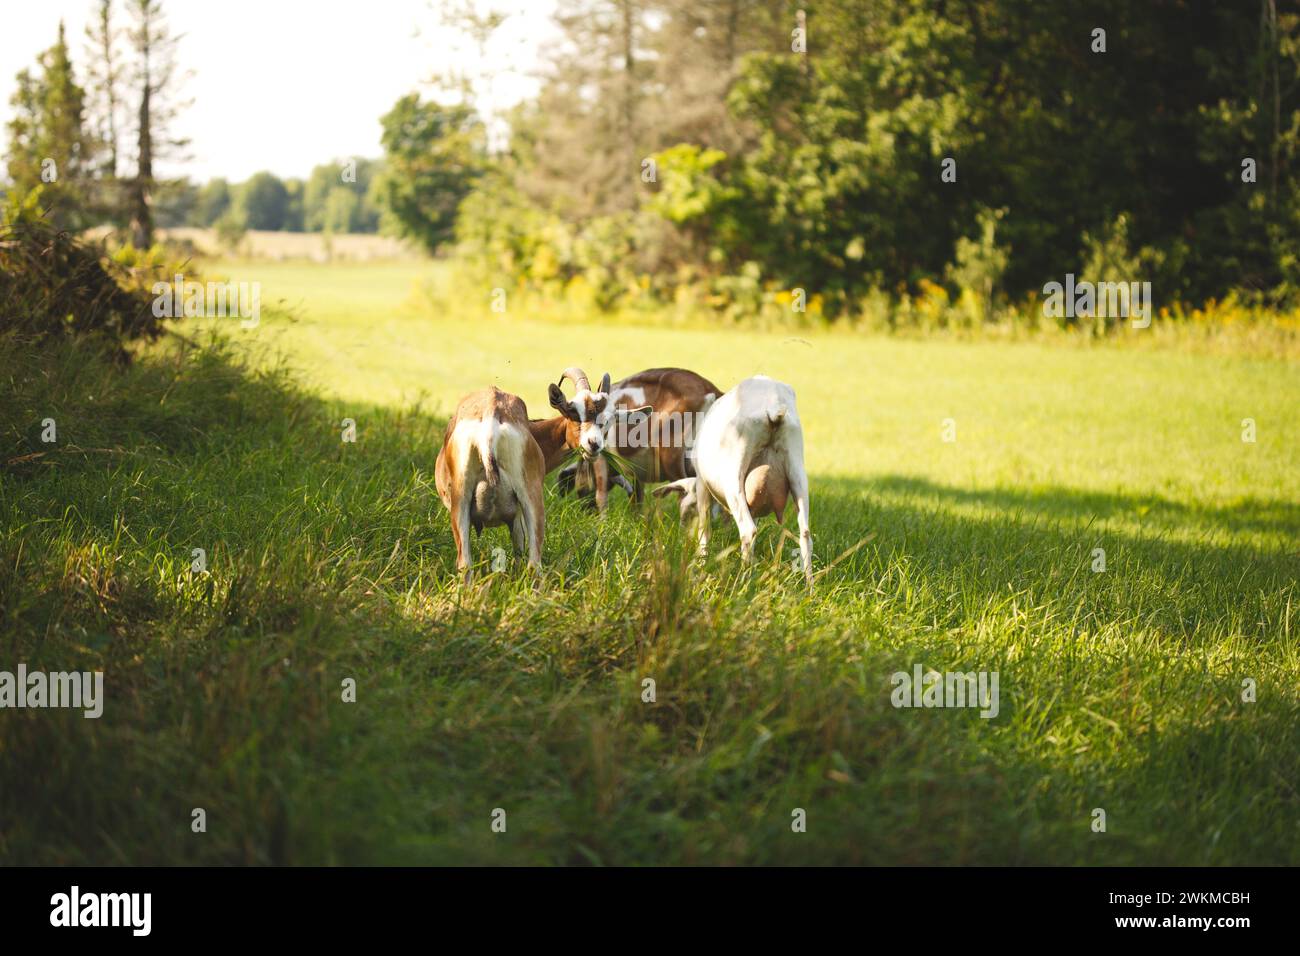 Herd of goats grazing in grassy farm field Stock Photo